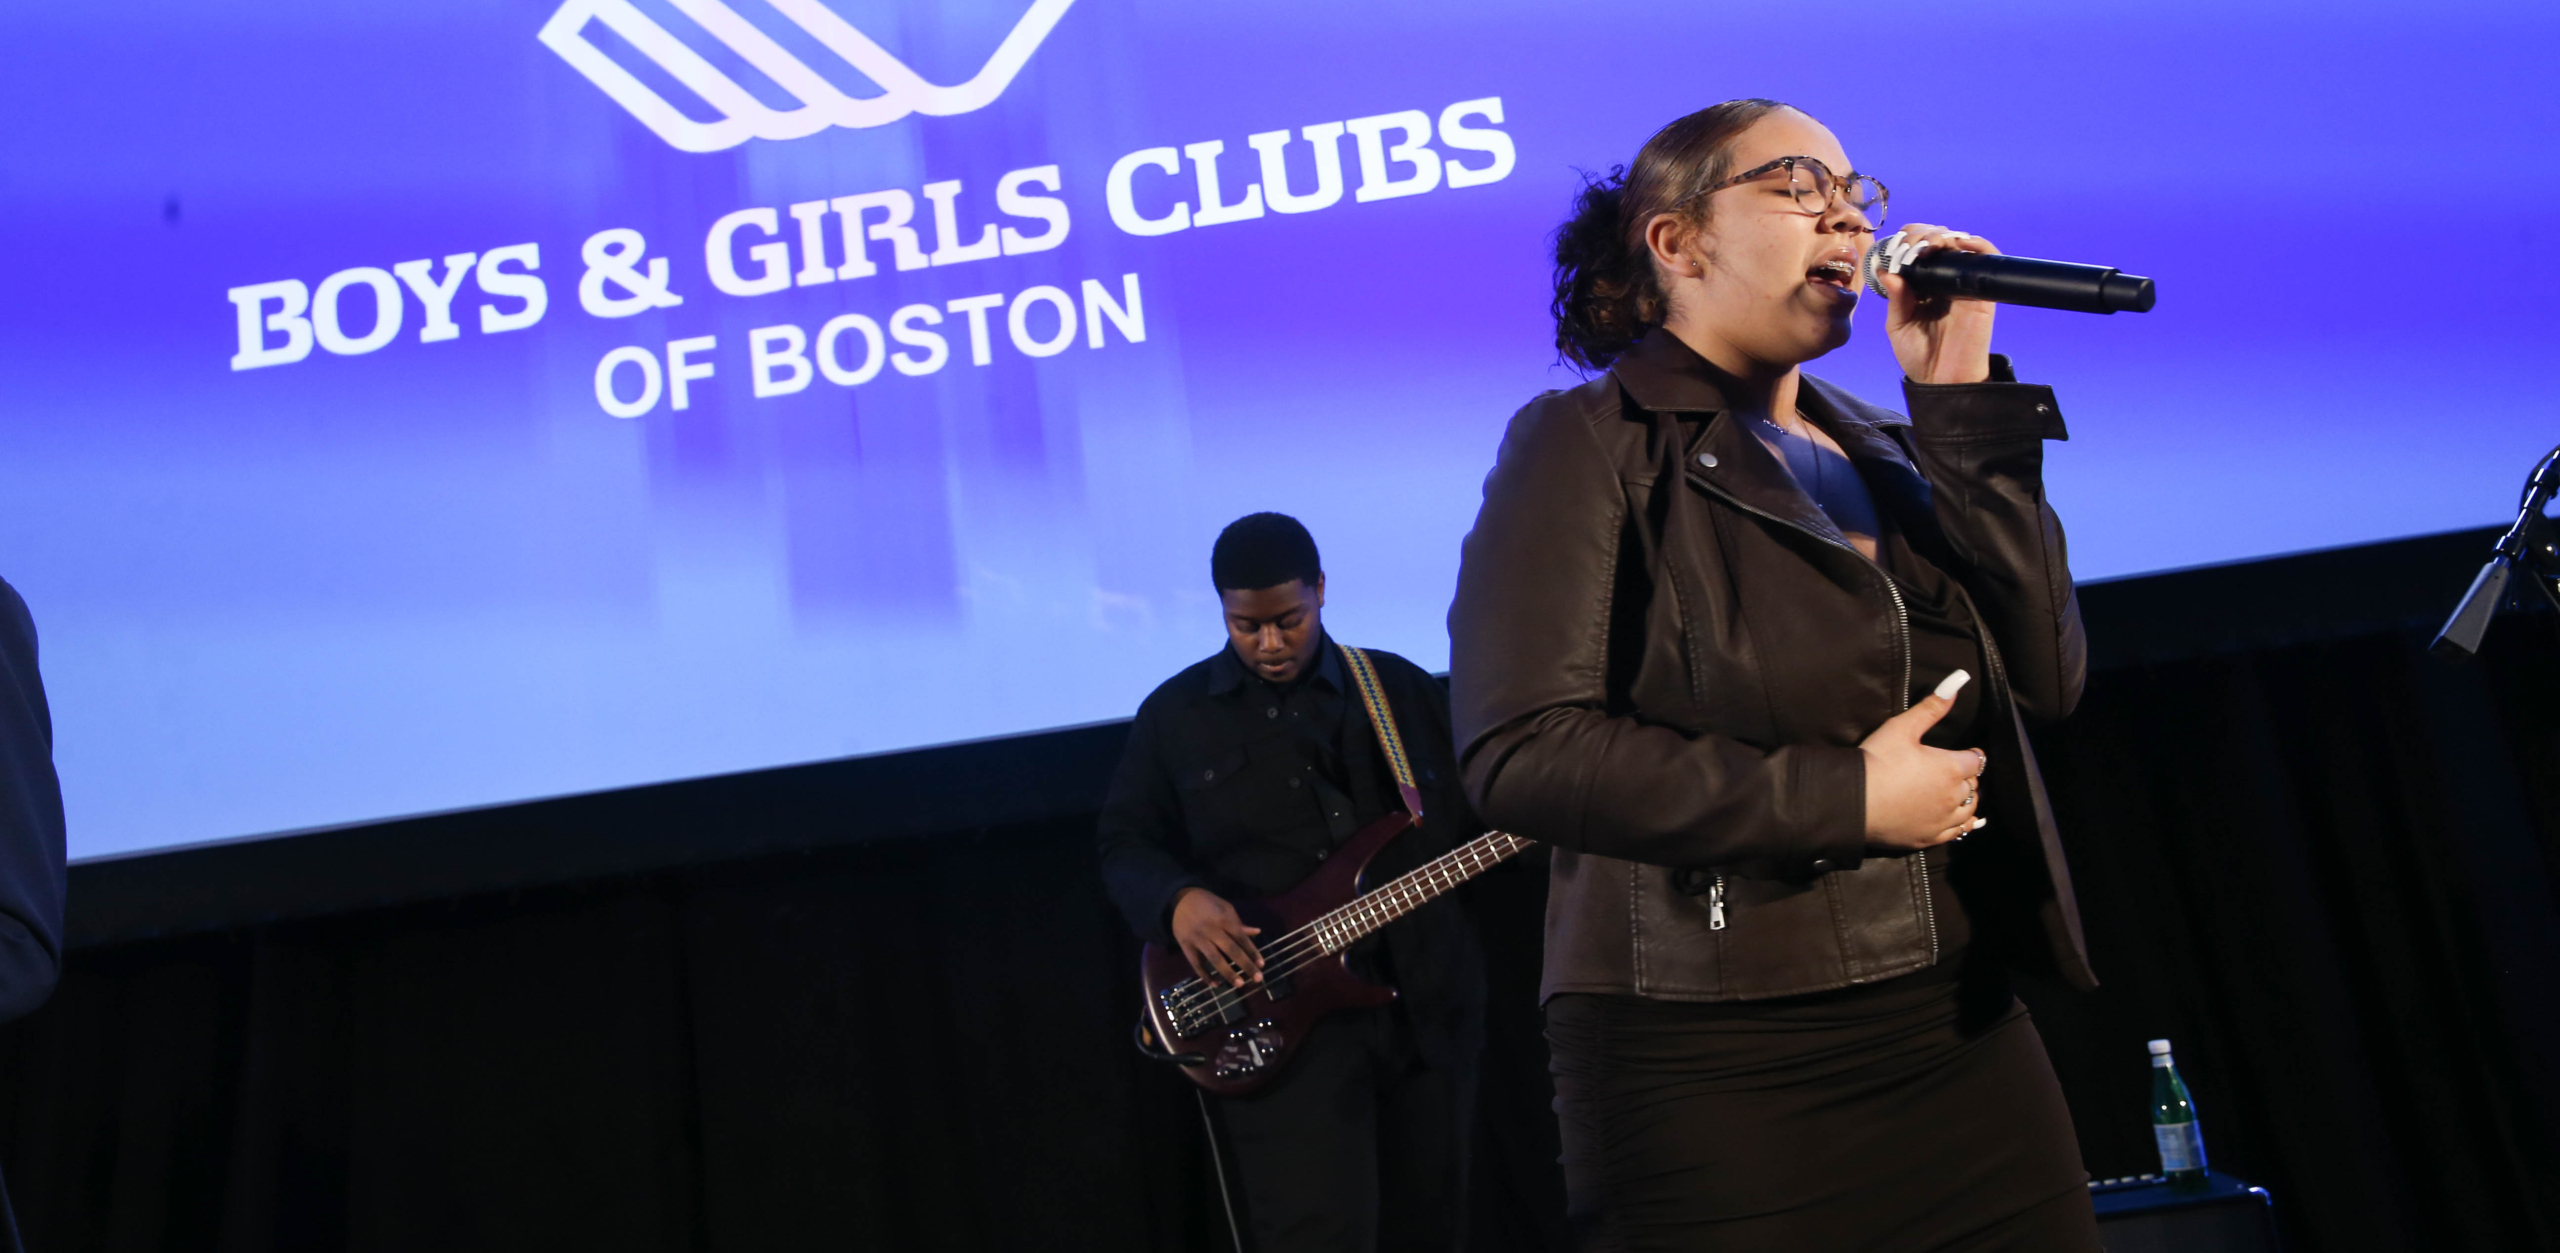 Boys & Girls Clubs of Boston holds 130th anniversary dinner – Bill